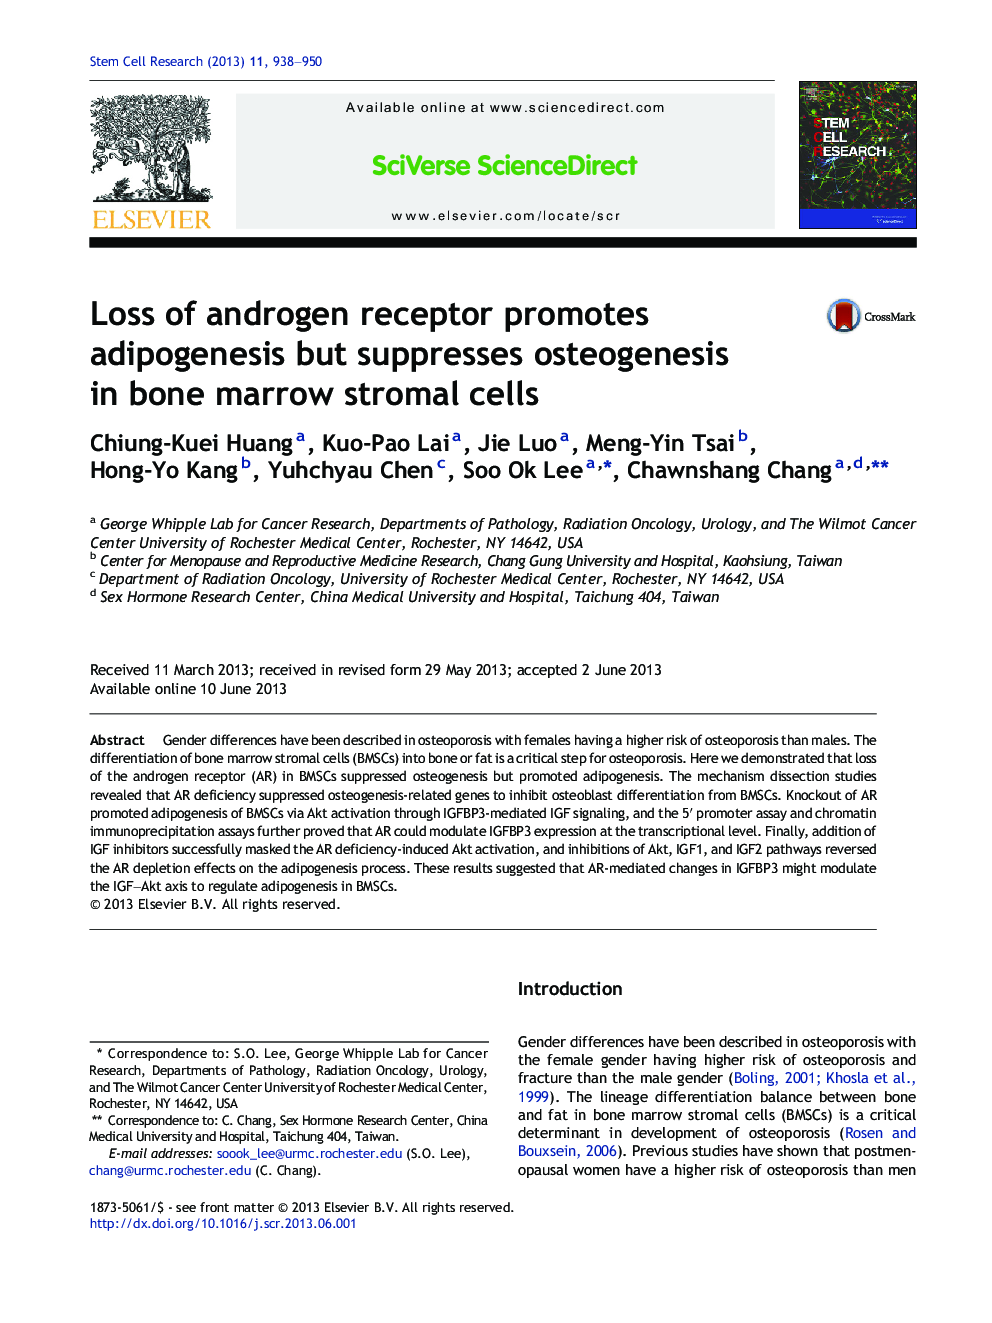 Loss of androgen receptor promotes adipogenesis but suppresses osteogenesis in bone marrow stromal cells